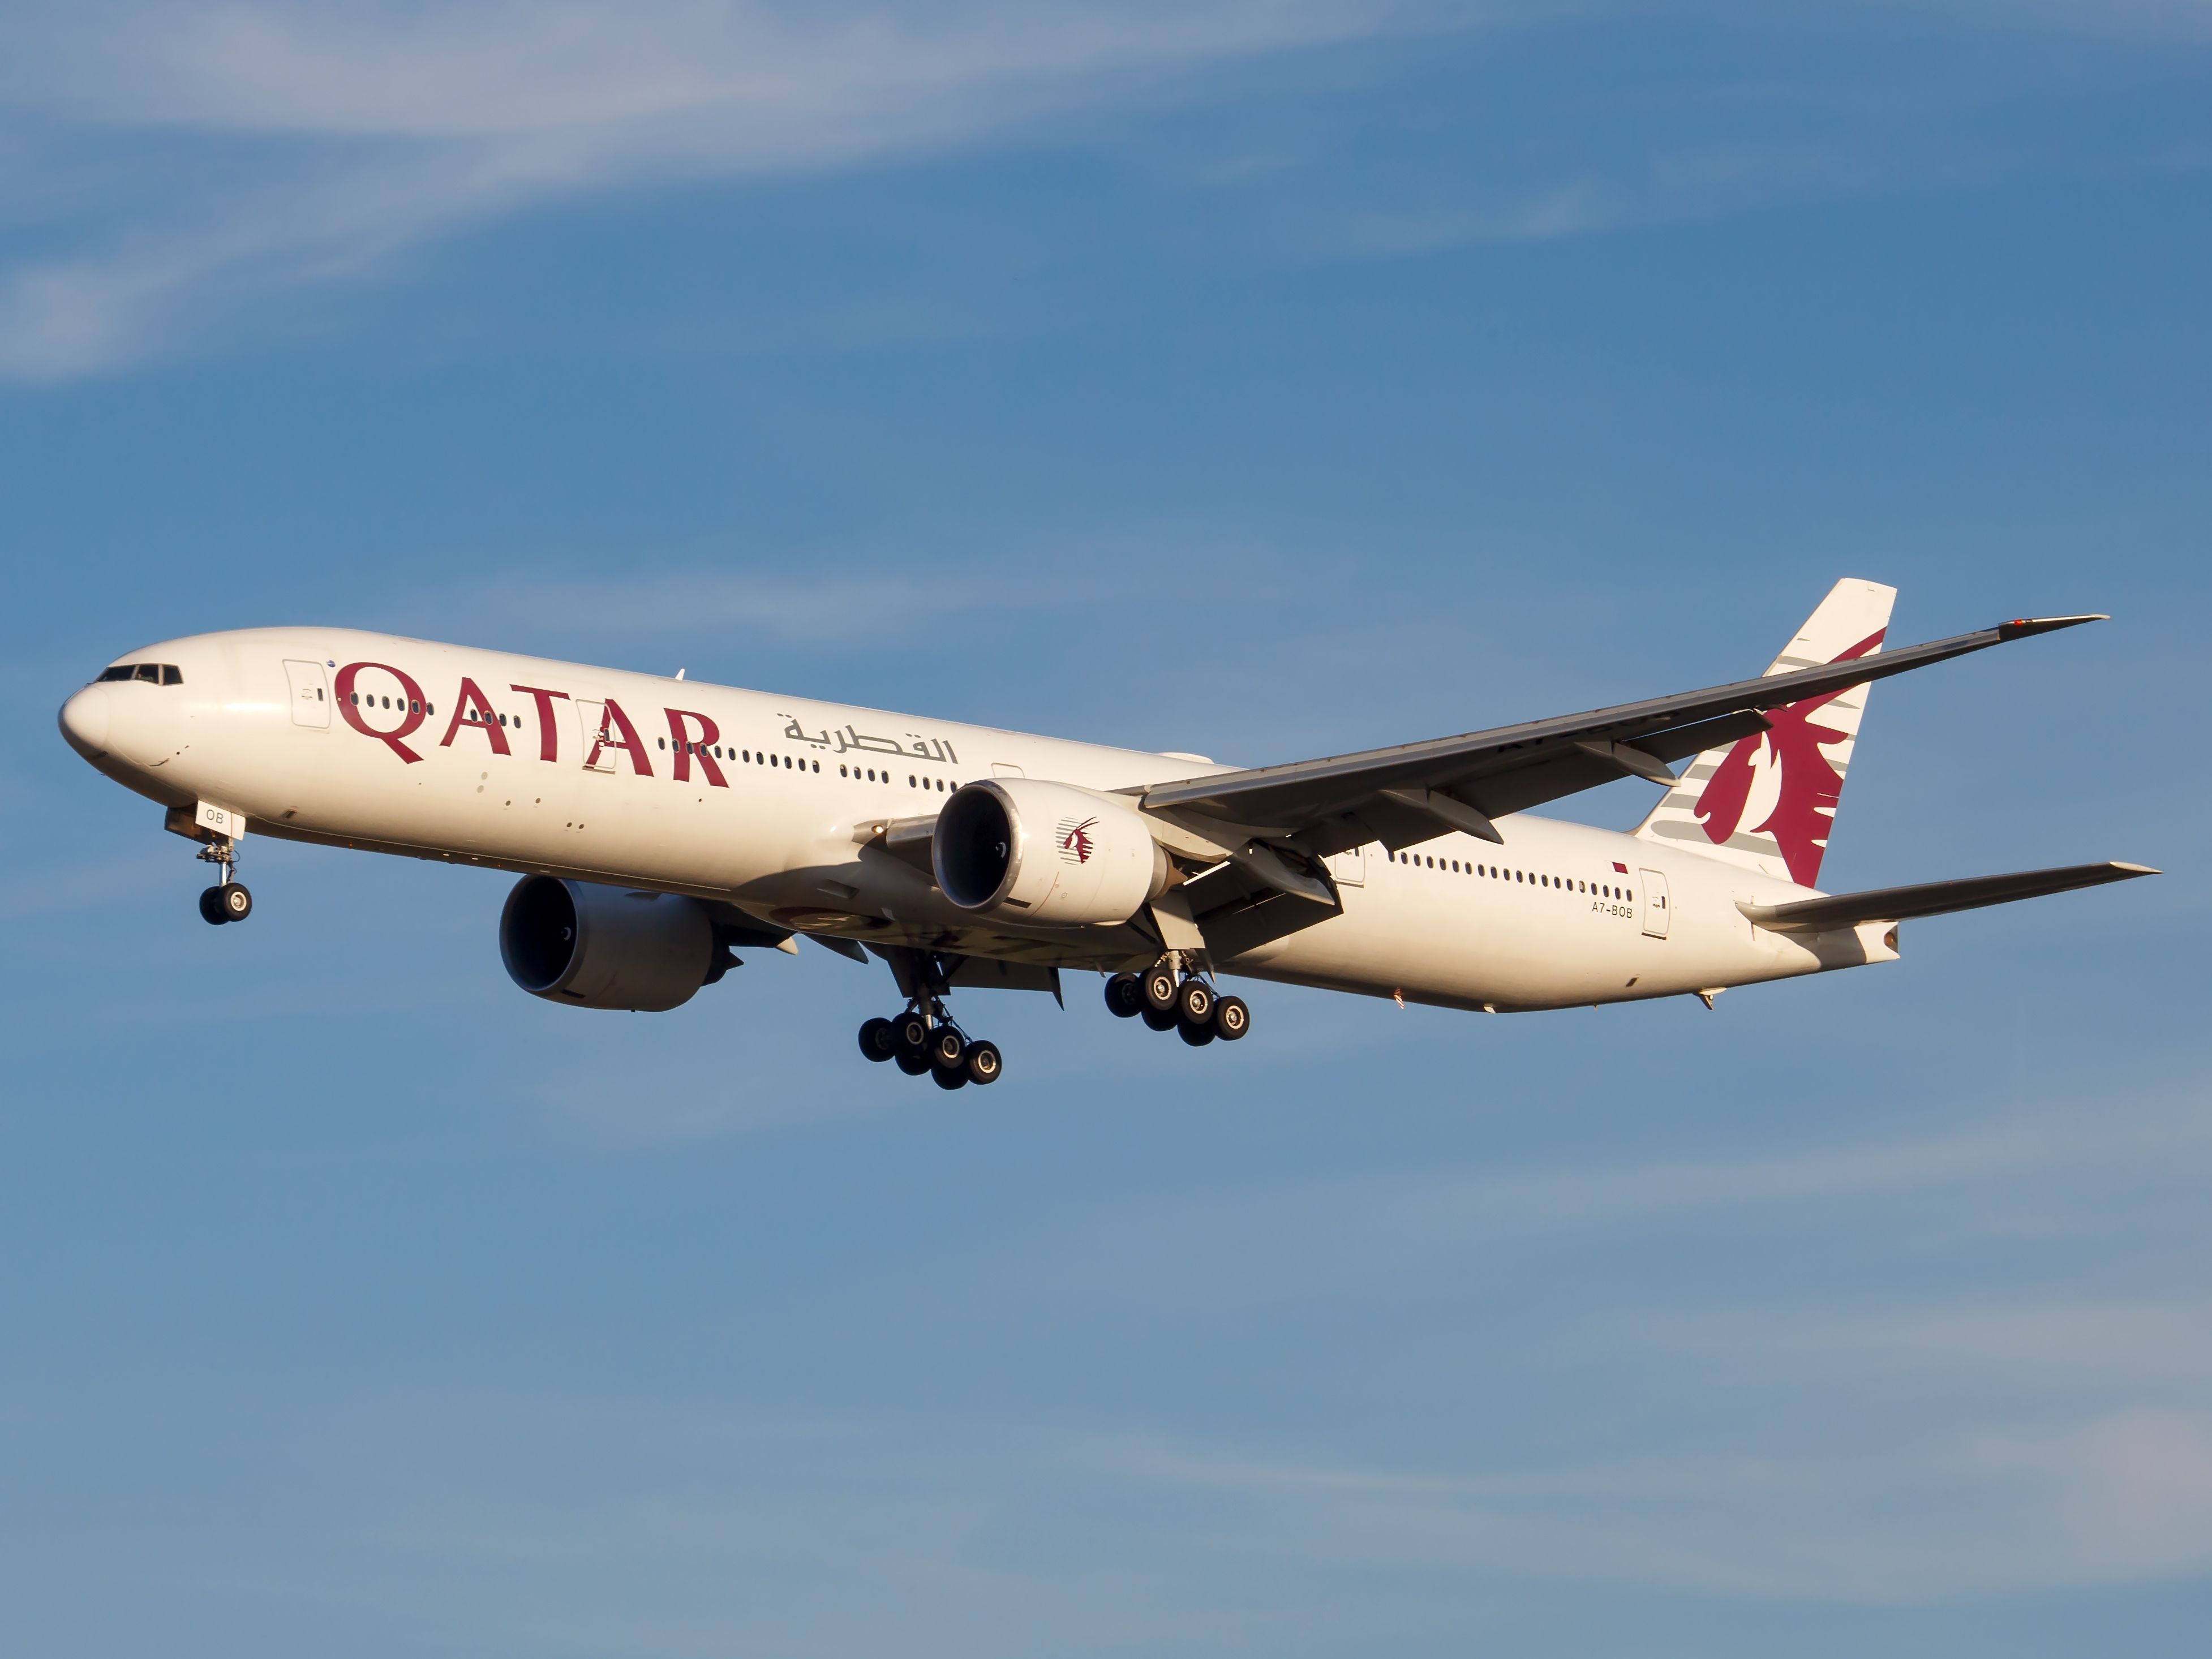 A Qatar Airways Boeing 777-300ER Flying in the sky.